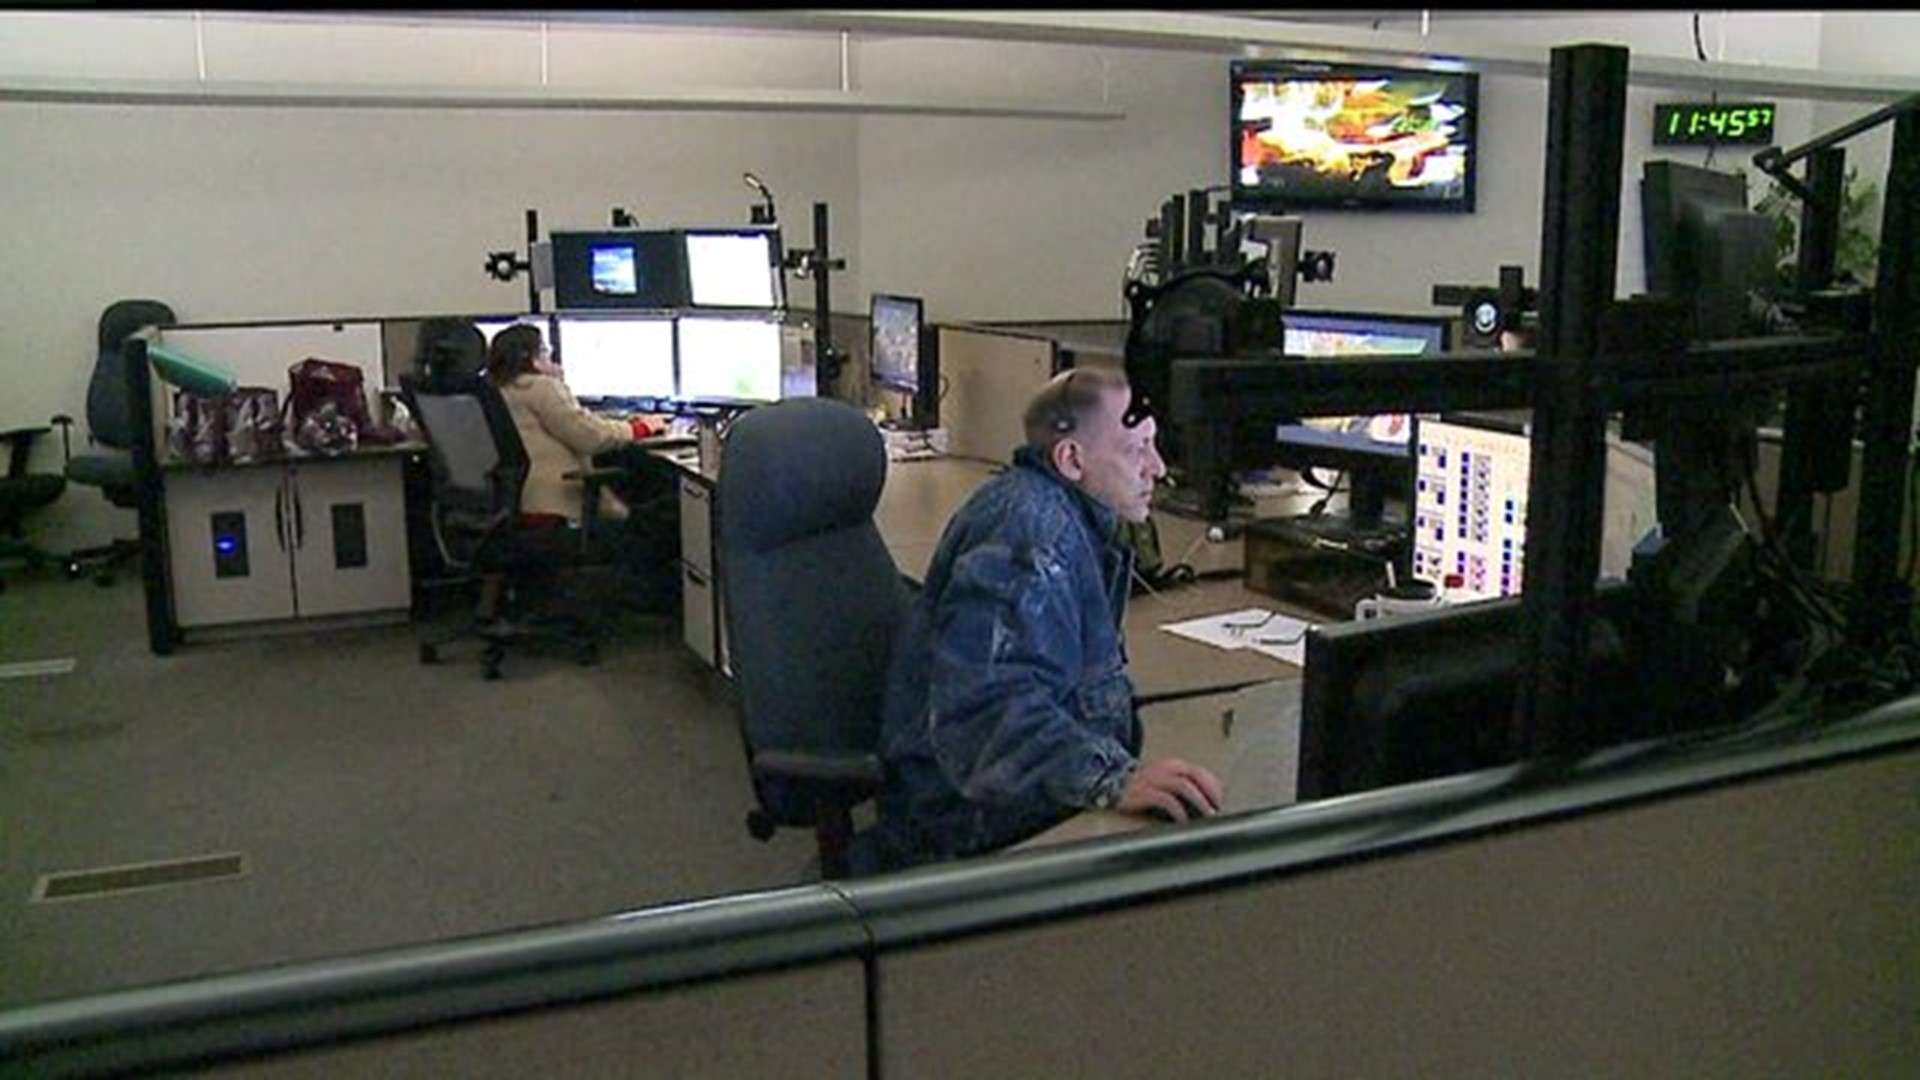 911 funding crisis in Dauphin County